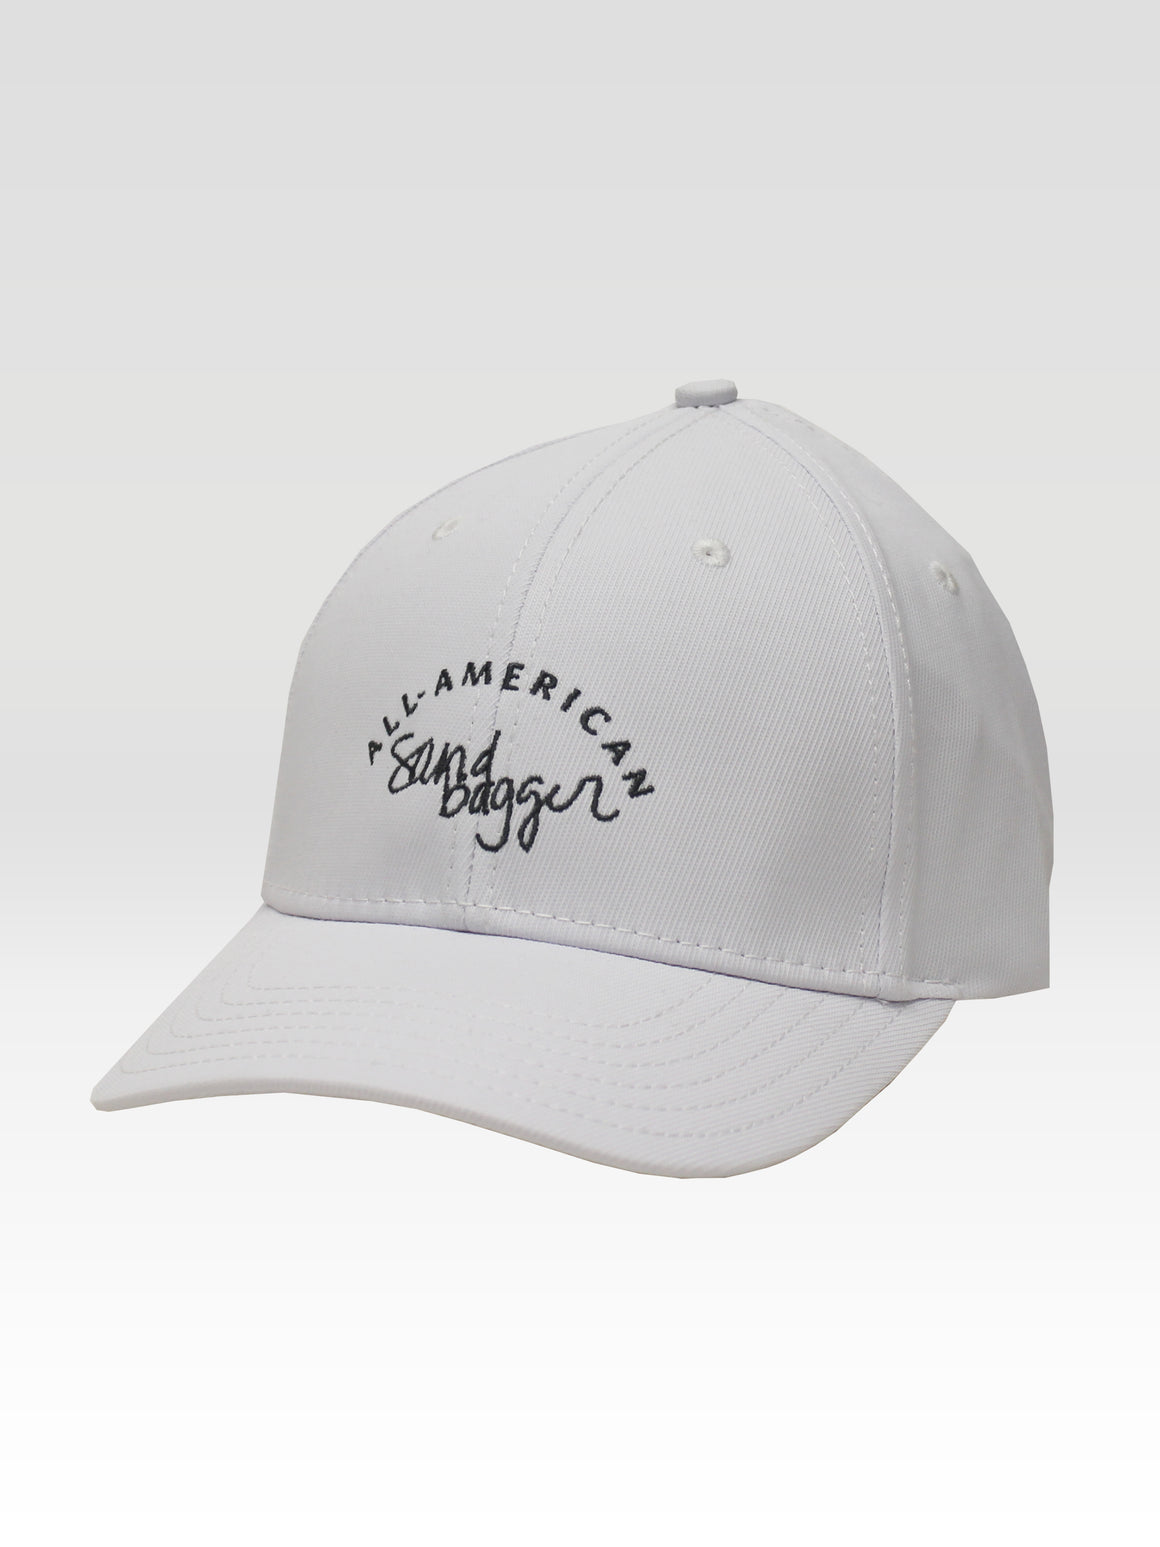 All American Sandbagger Sport - White (Brand Grey)